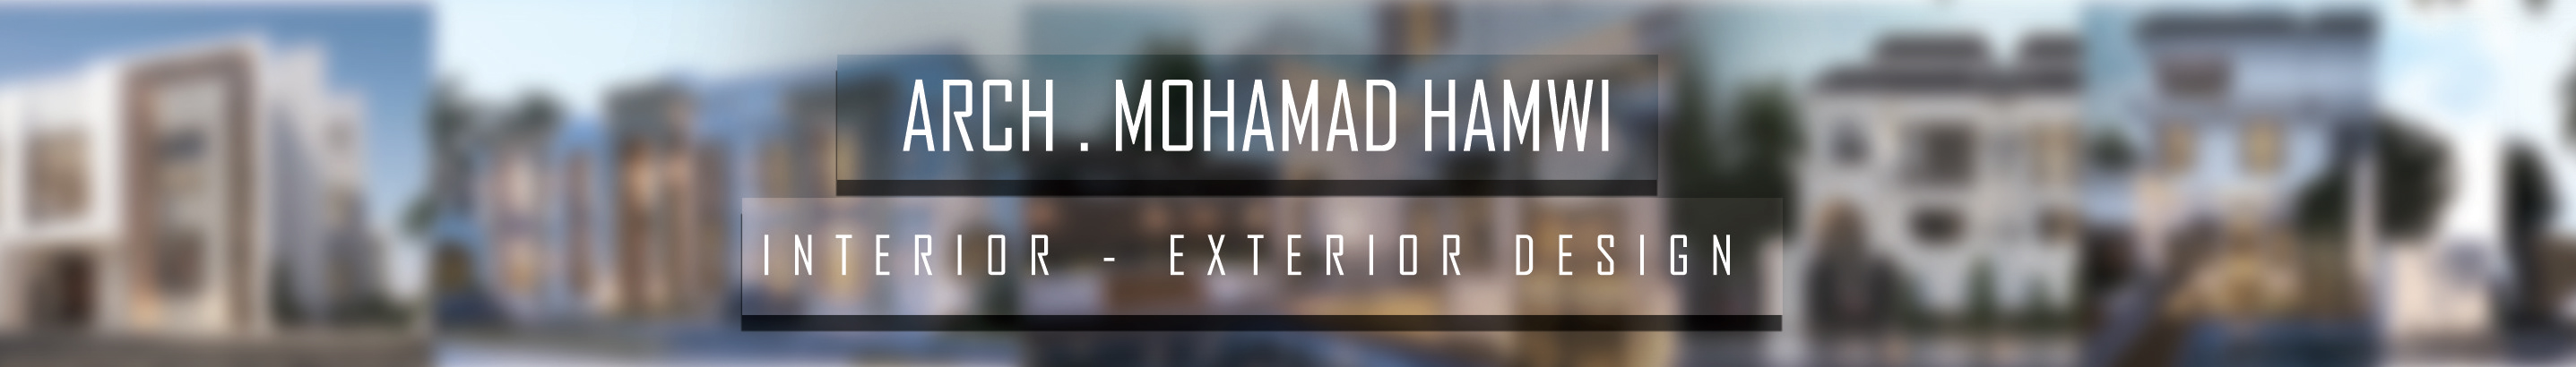 Mohamad Hamwi's profile banner